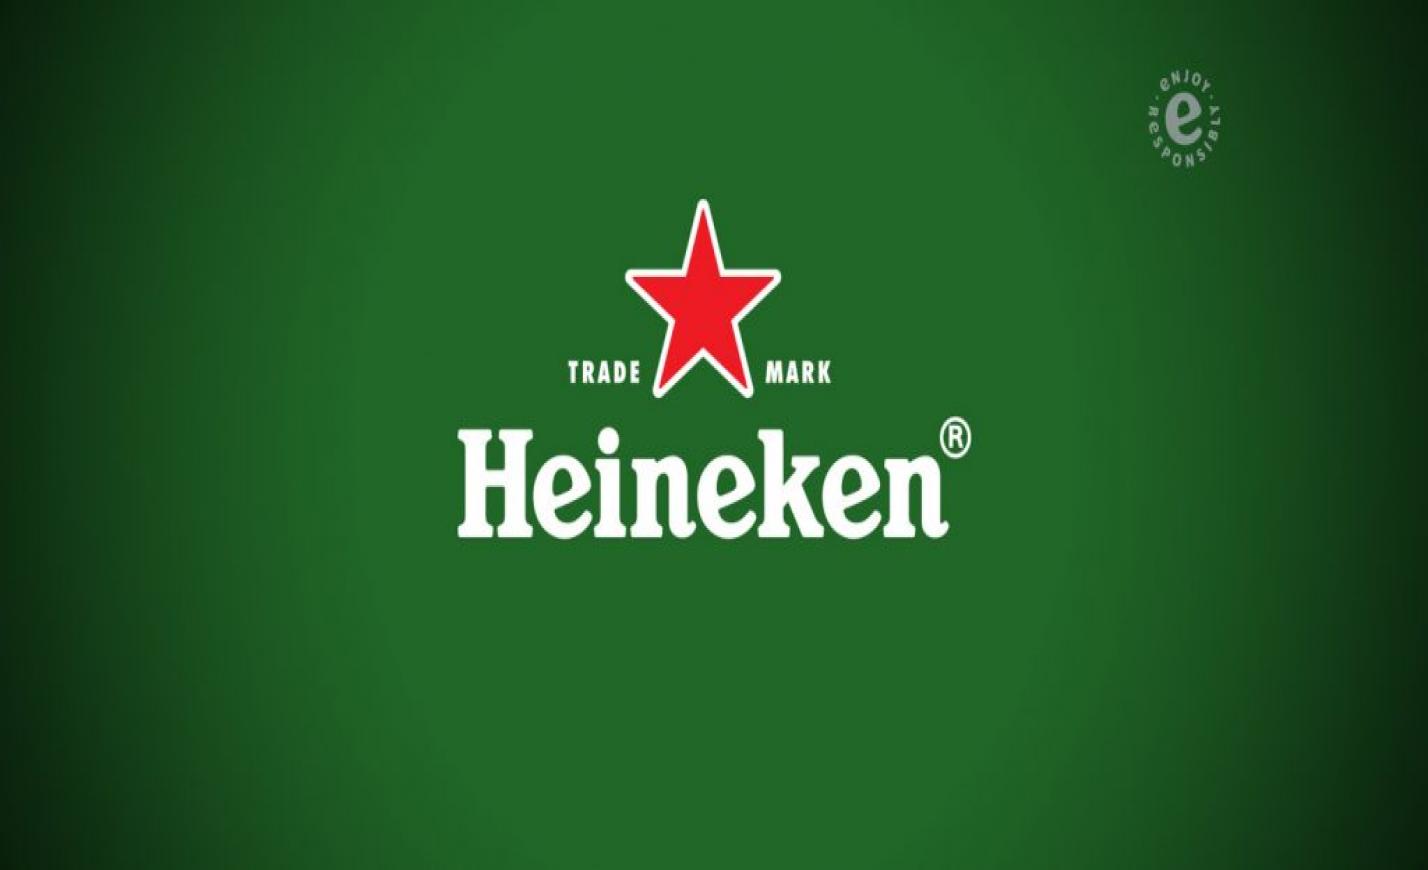 Karbonsemleges lesz a Heineken 2040-re